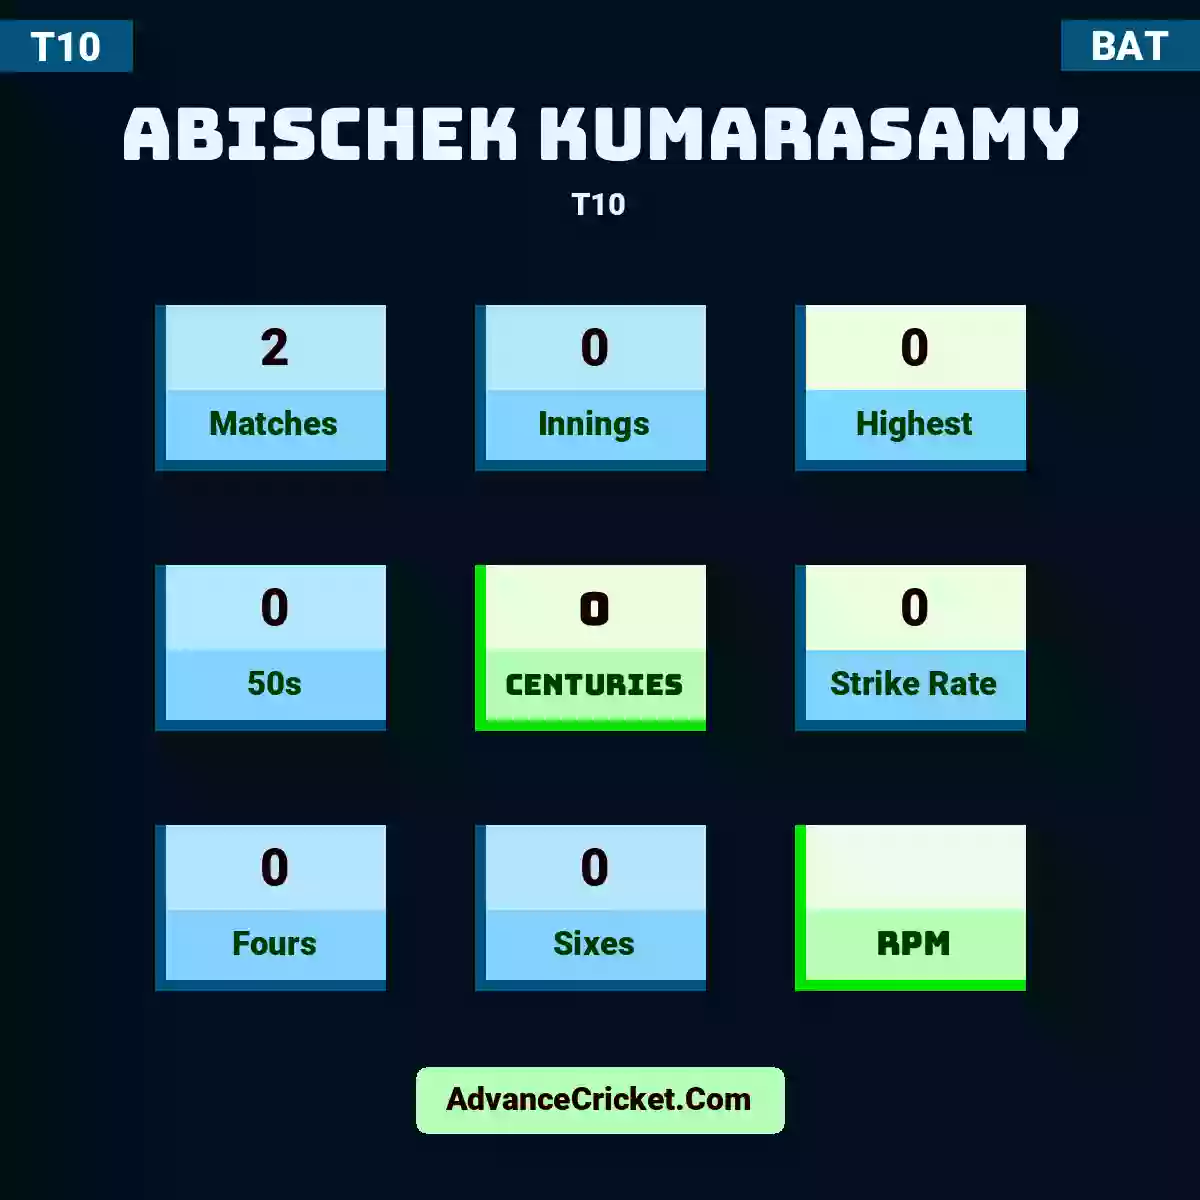 Abischek Kumarasamy T10 , Abischek Kumarasamy played 2 matches, scored 0 runs as highest, 0 half-centuries, and 0 centuries, with a strike rate of 0. A.Kumarasamy hit 0 fours and 0 sixes.